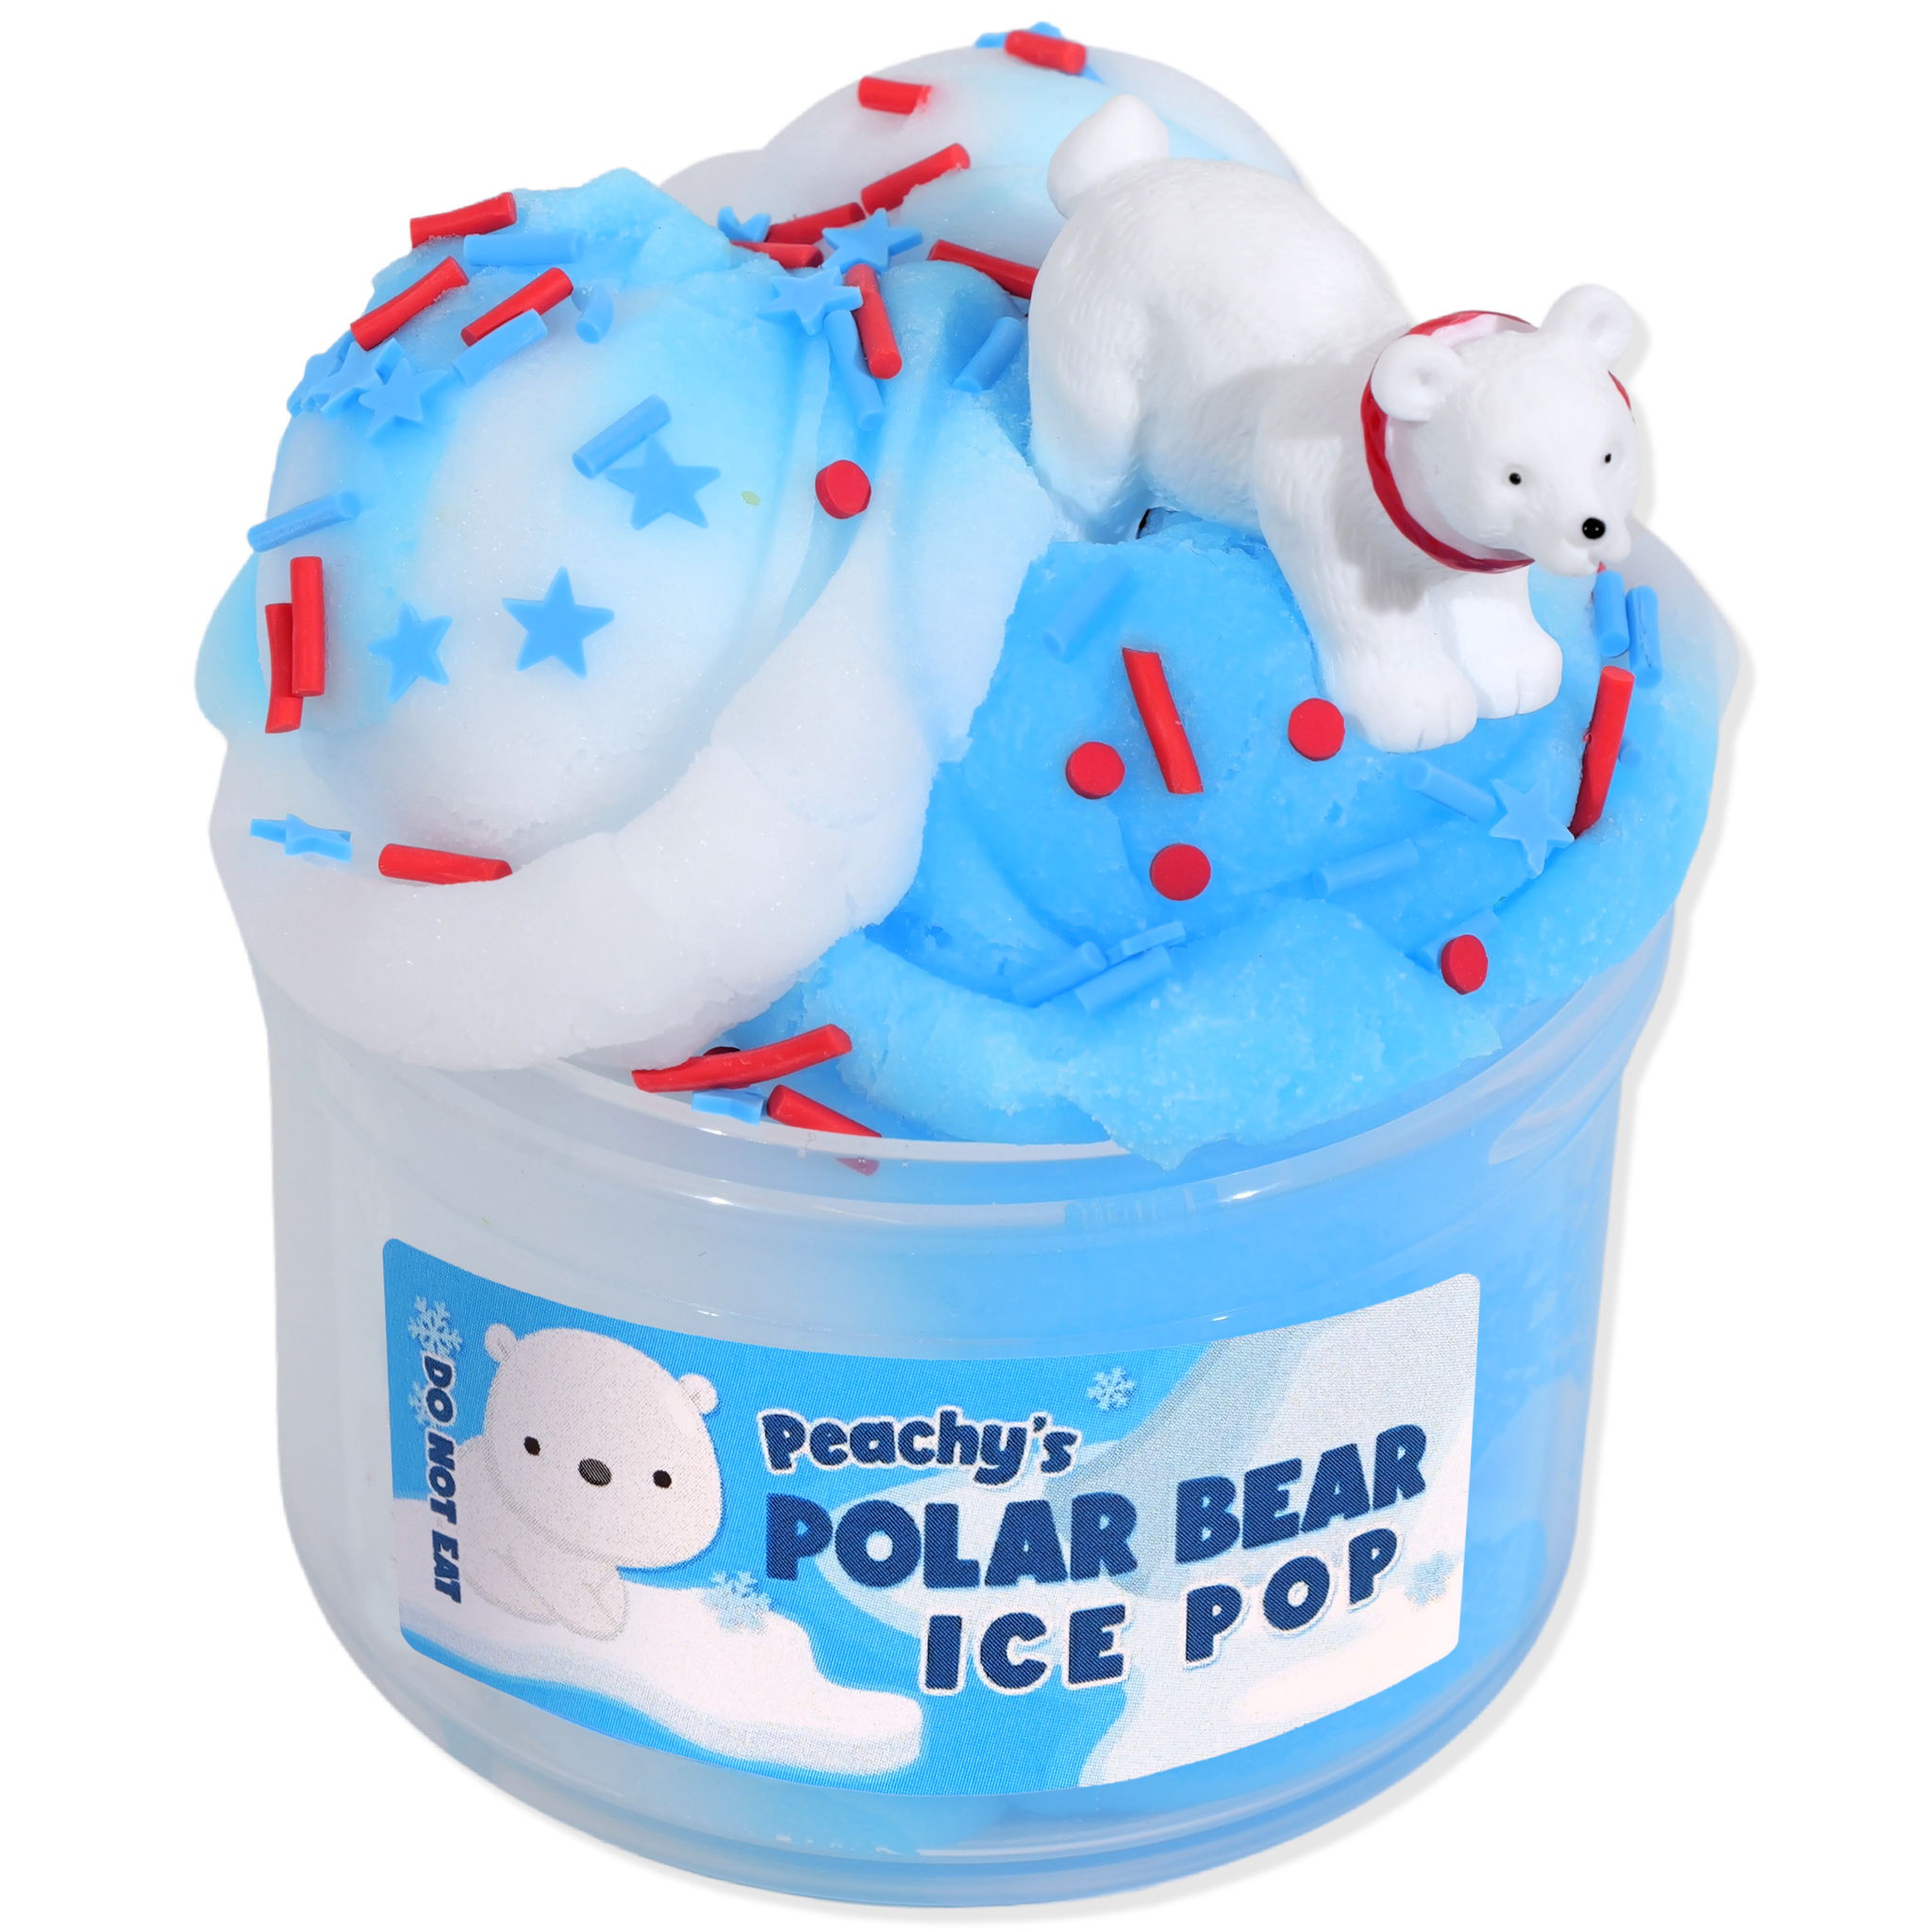 Kawaii Slime - Polar Bear Plunge - G.Williker's Toy Shoppe Inc